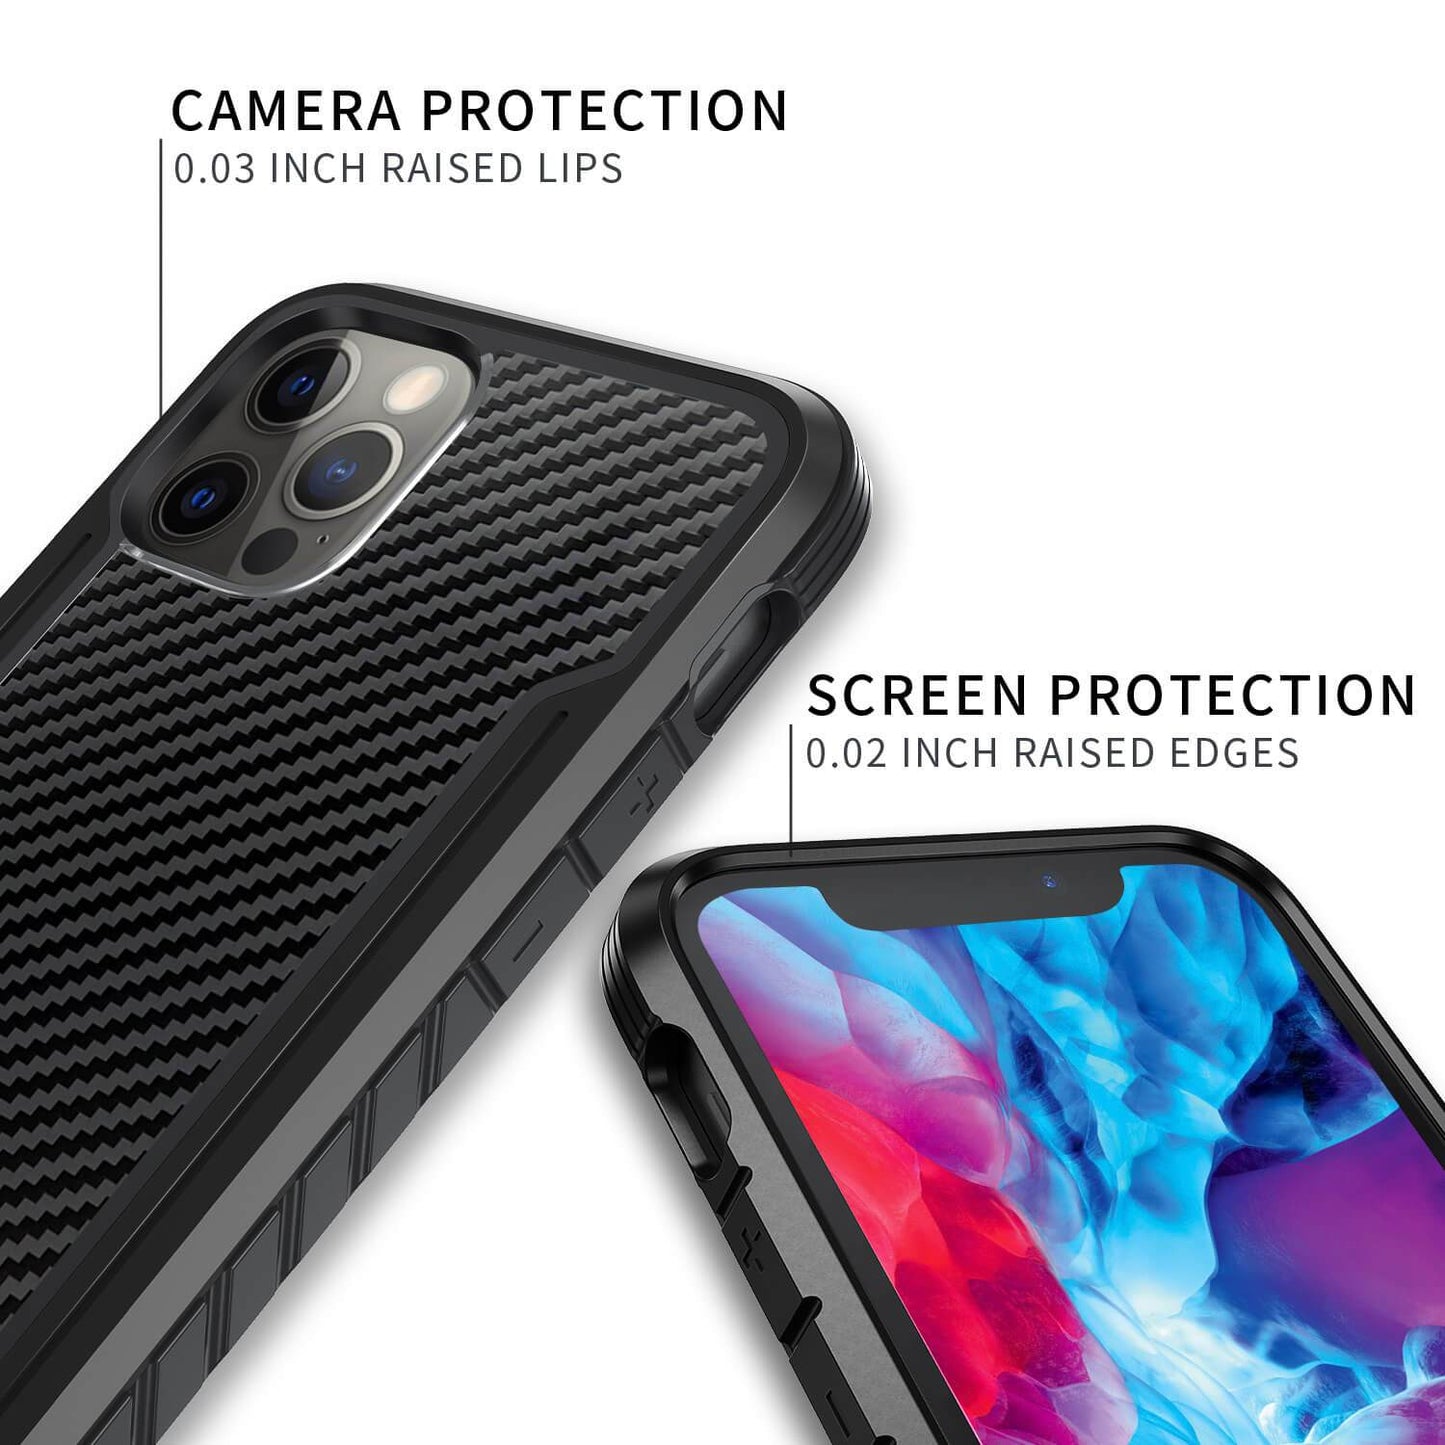 Tough On iPhone 12 / iPhone 12 Pro Case Iron Shield Carbon Fiber Black